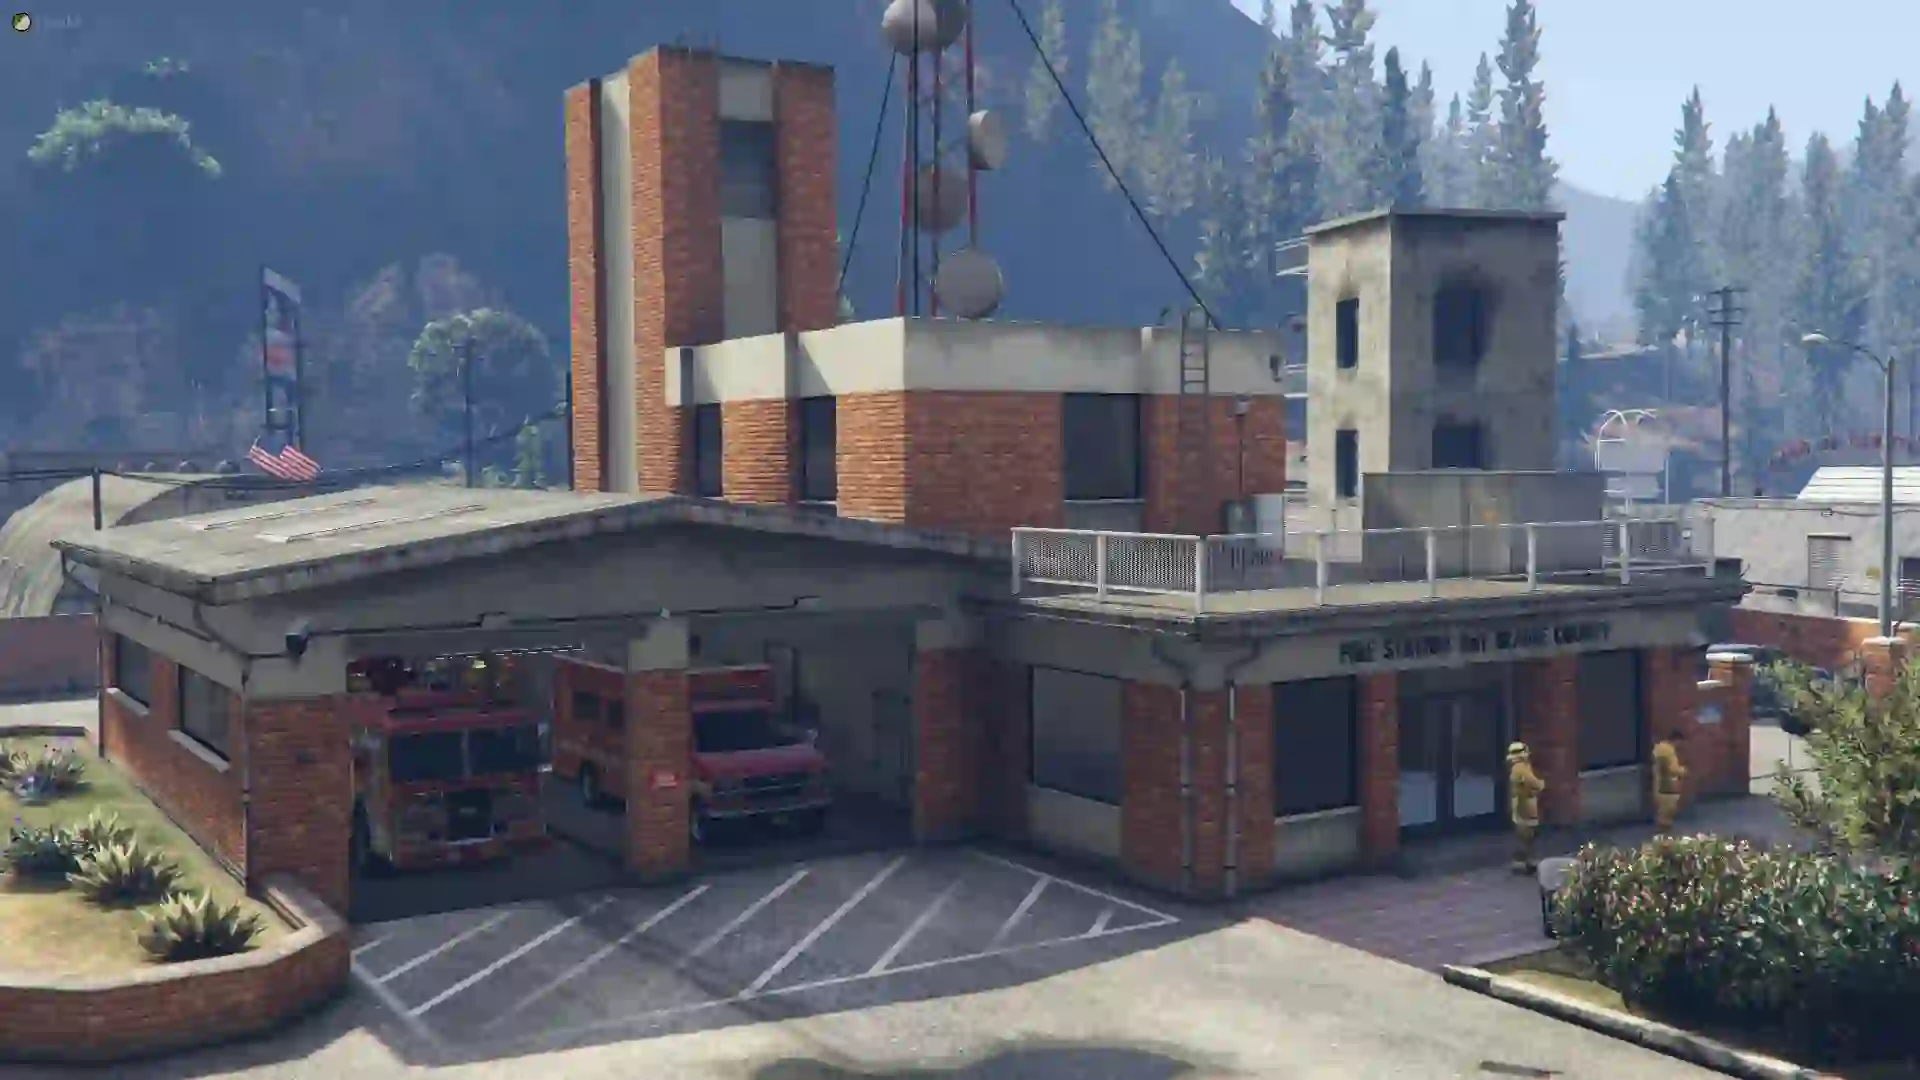 Paleto-Bay Fire Station GTA 5